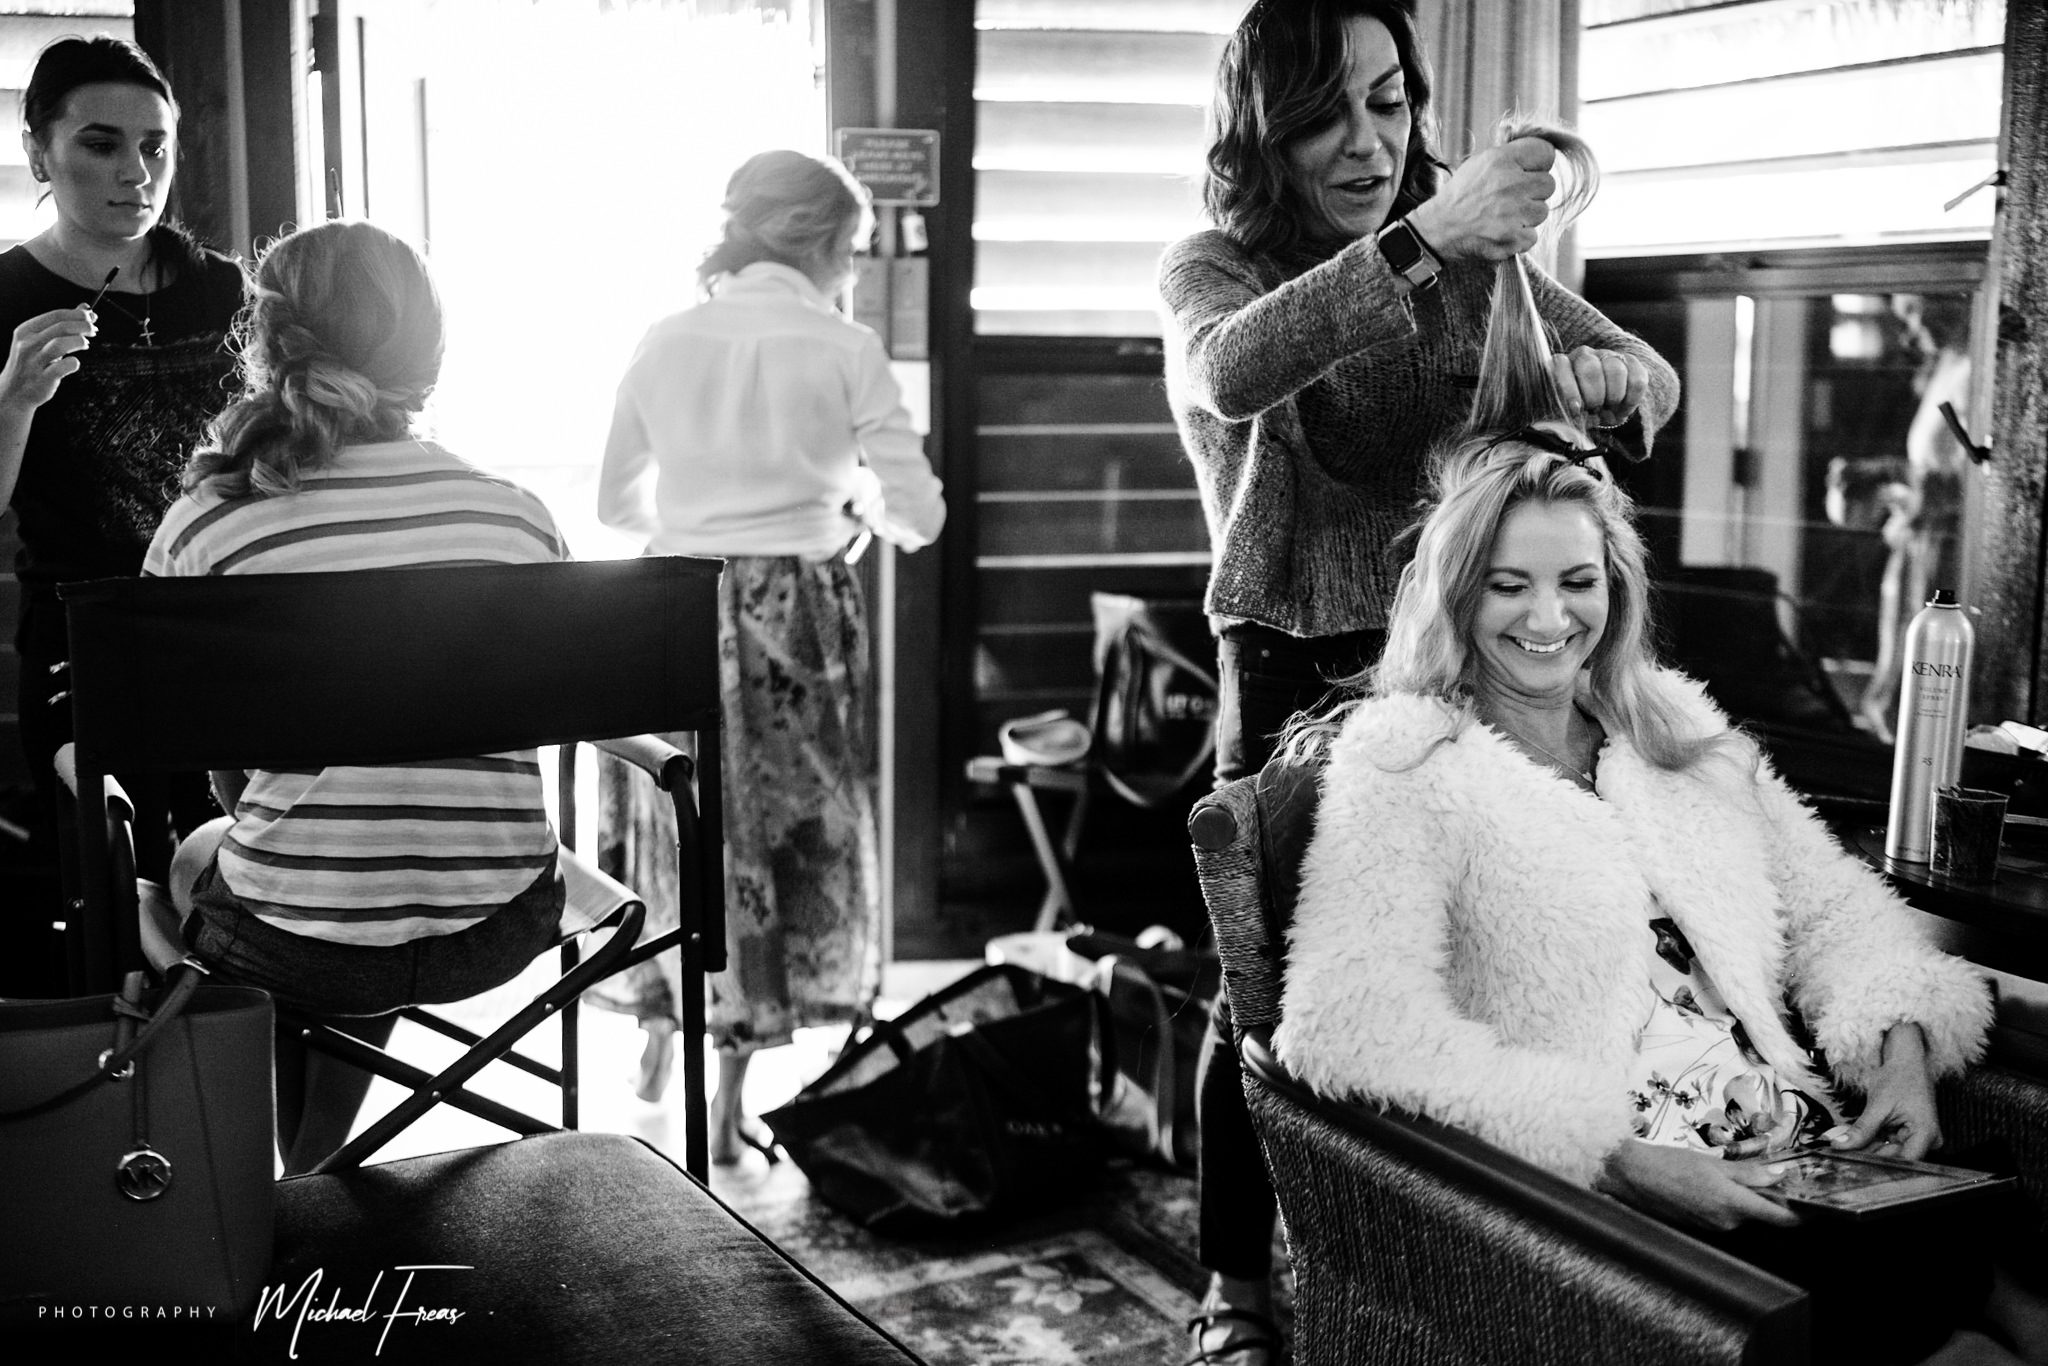 A woman getting her hair done for a Florida Keys destination wedding.